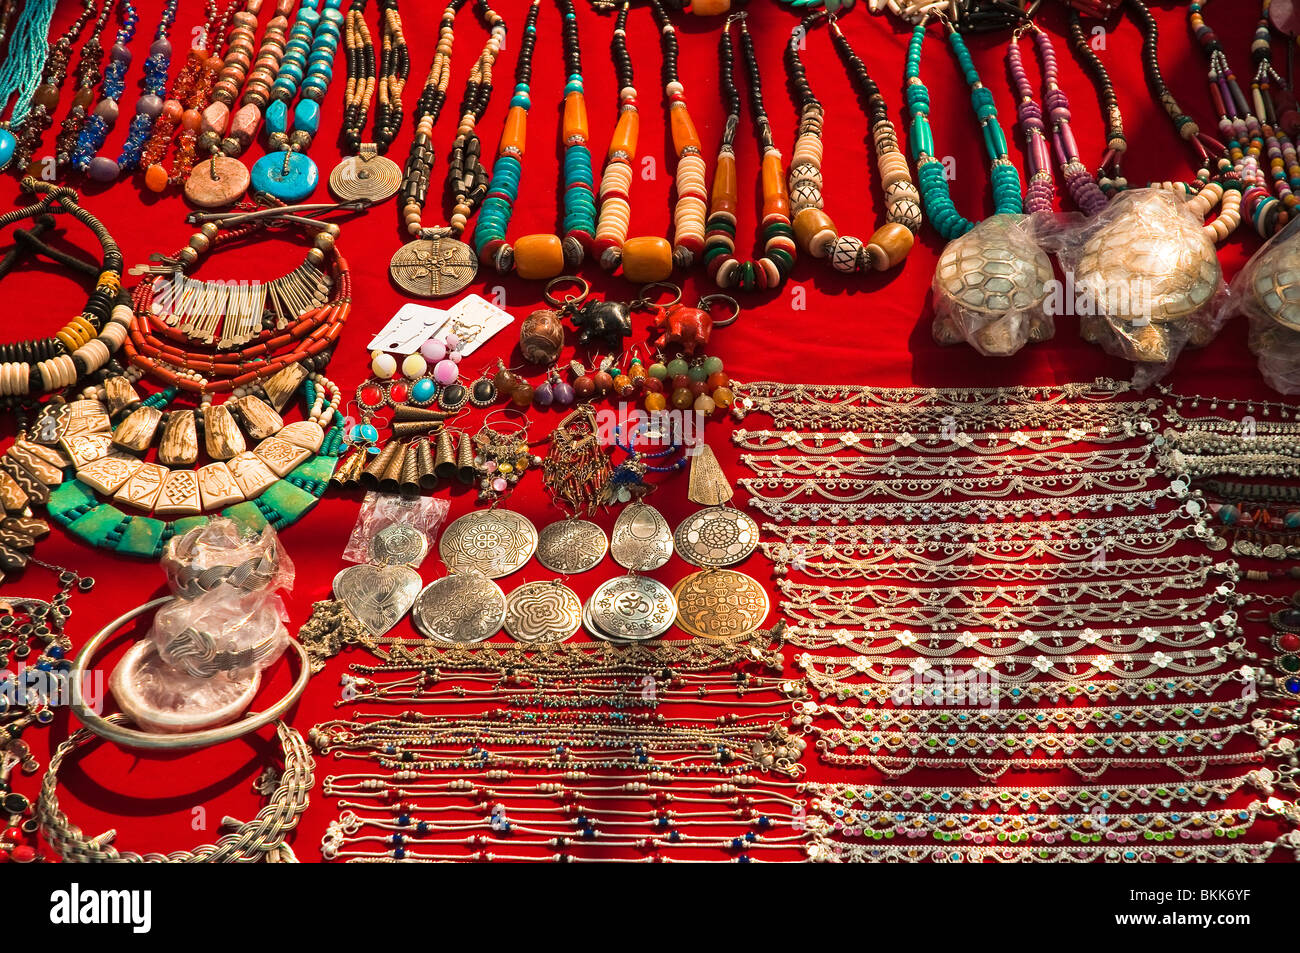 Costume Jewelery for sale in Anjuna Flea Market, Goa, India Stock Photo